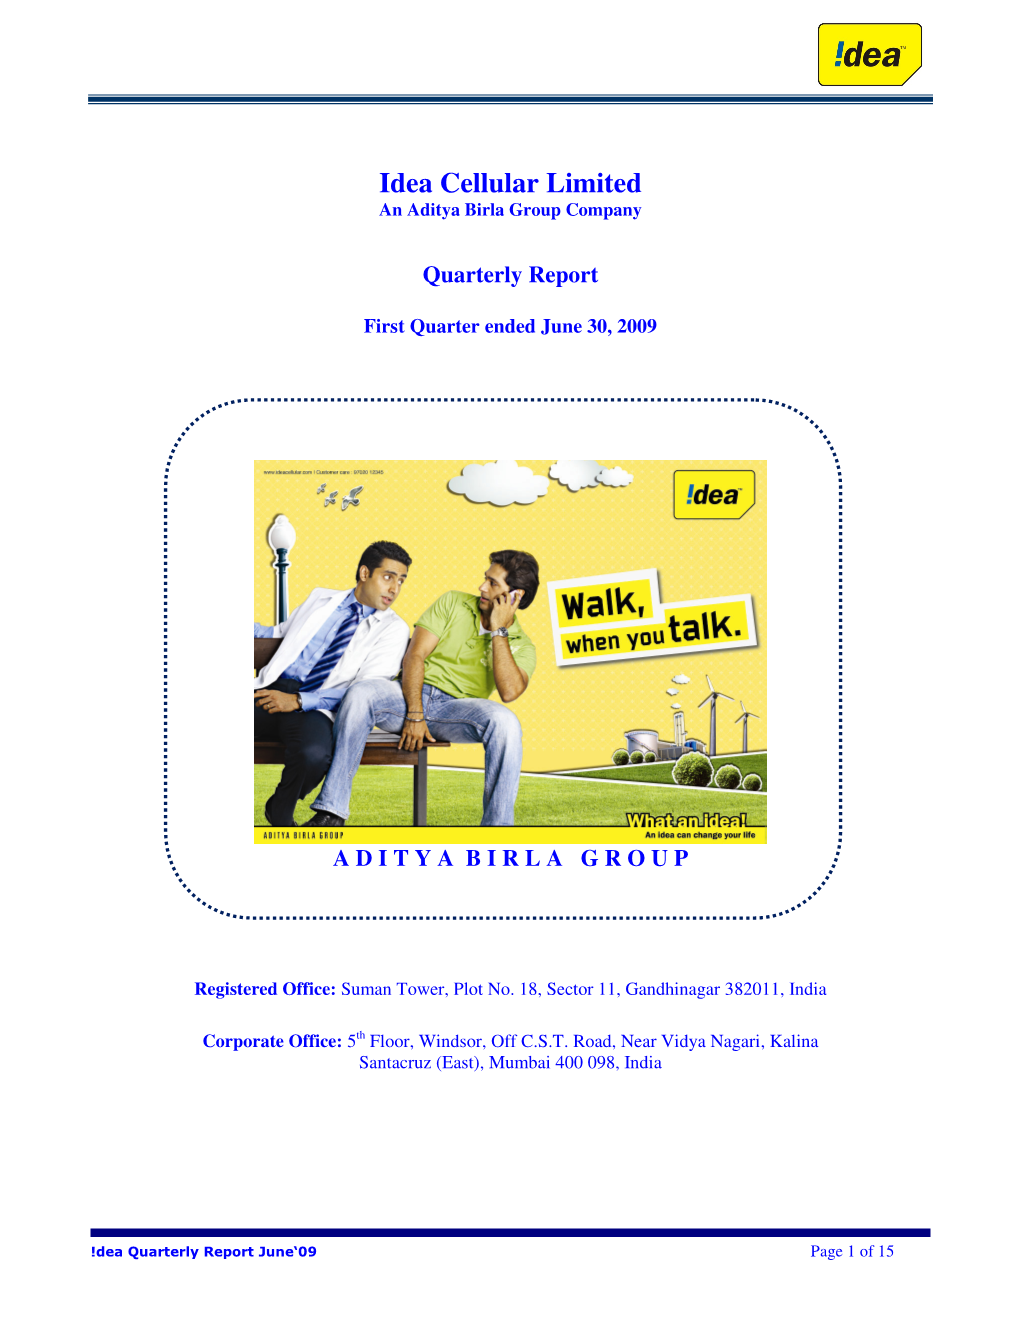 Idea Cellular Limited an Aditya Birla Group Company